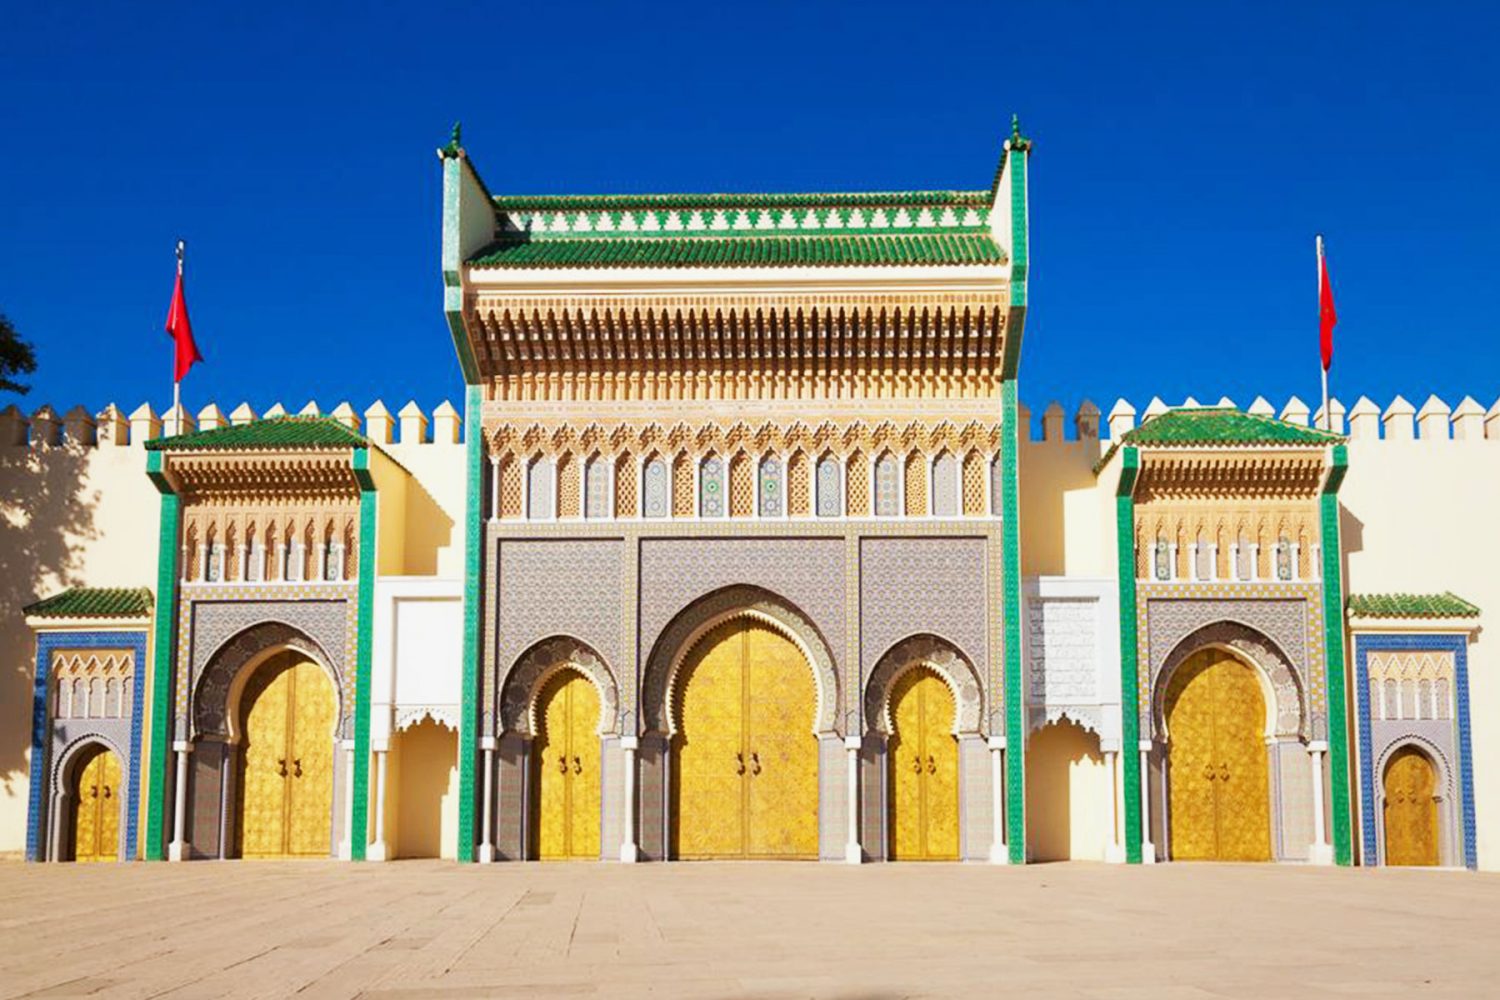 fes-king-palace-morocco-1500x1000